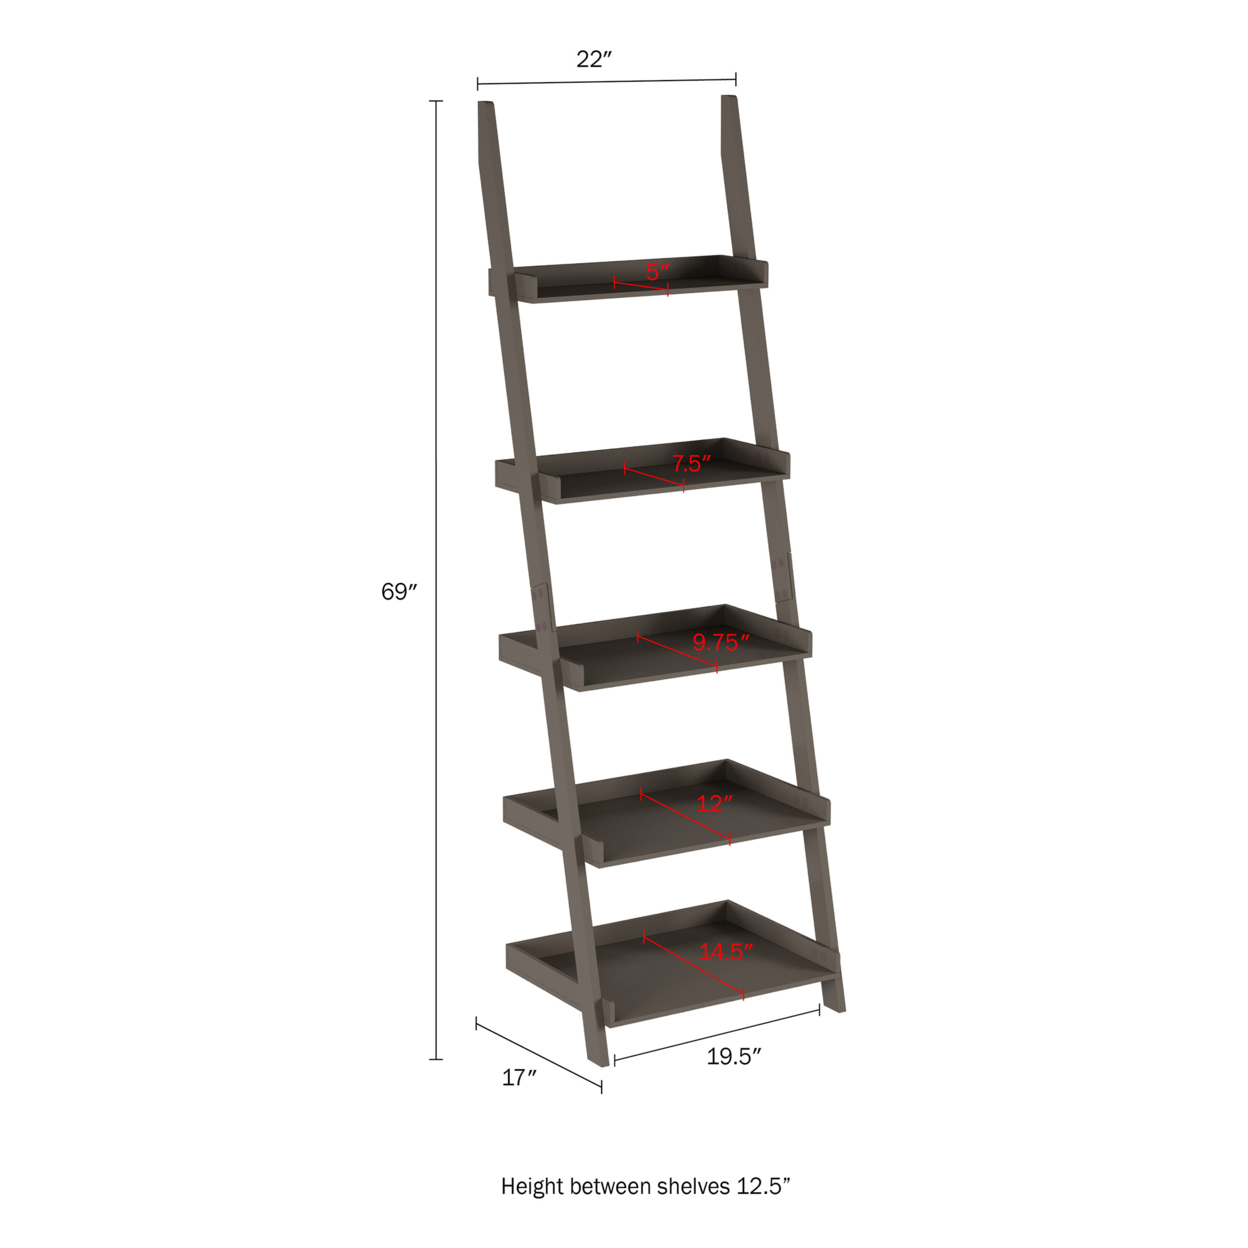 Ladder Bookshelf 5 Tier Leaning Decorative Shelves For Display-Slate Gray Shelf Stand-Living Room, Bathroom & Kitchen Shelving